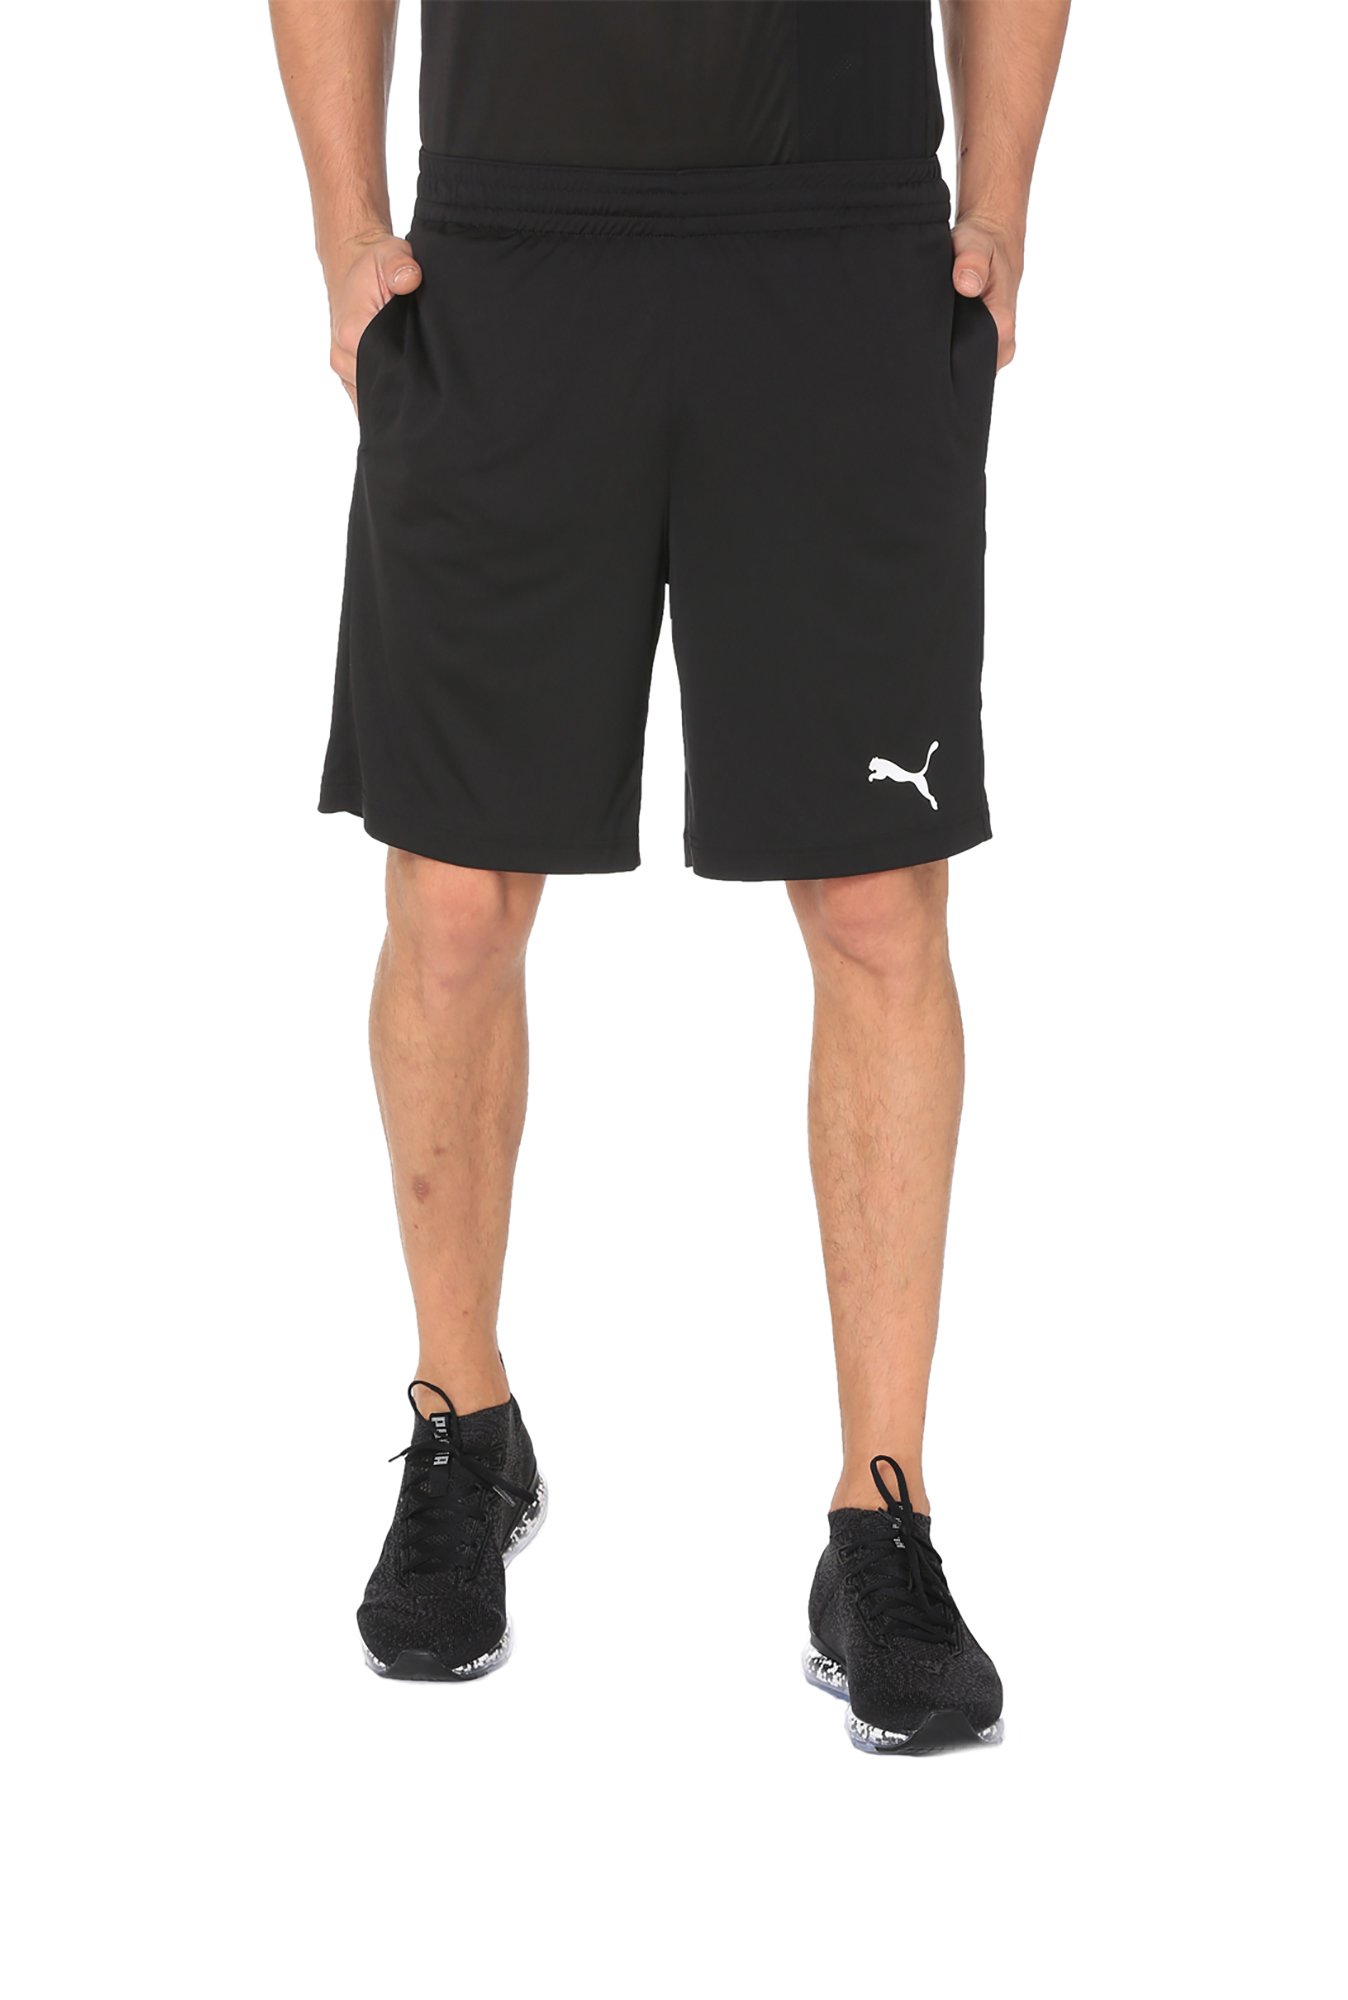 puma polyester shorts